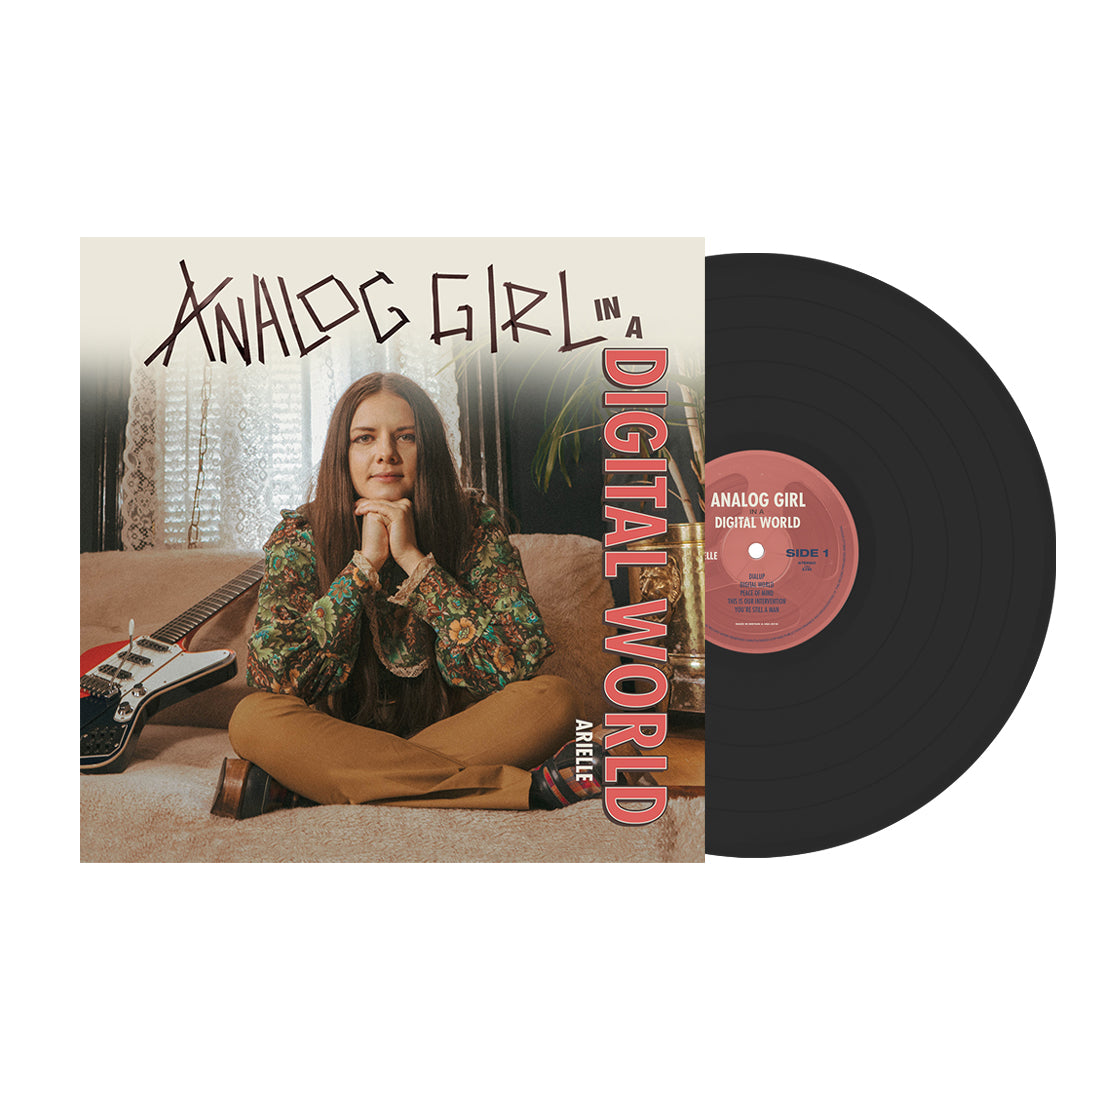 Analog Girl Exclusive Vinyl LP